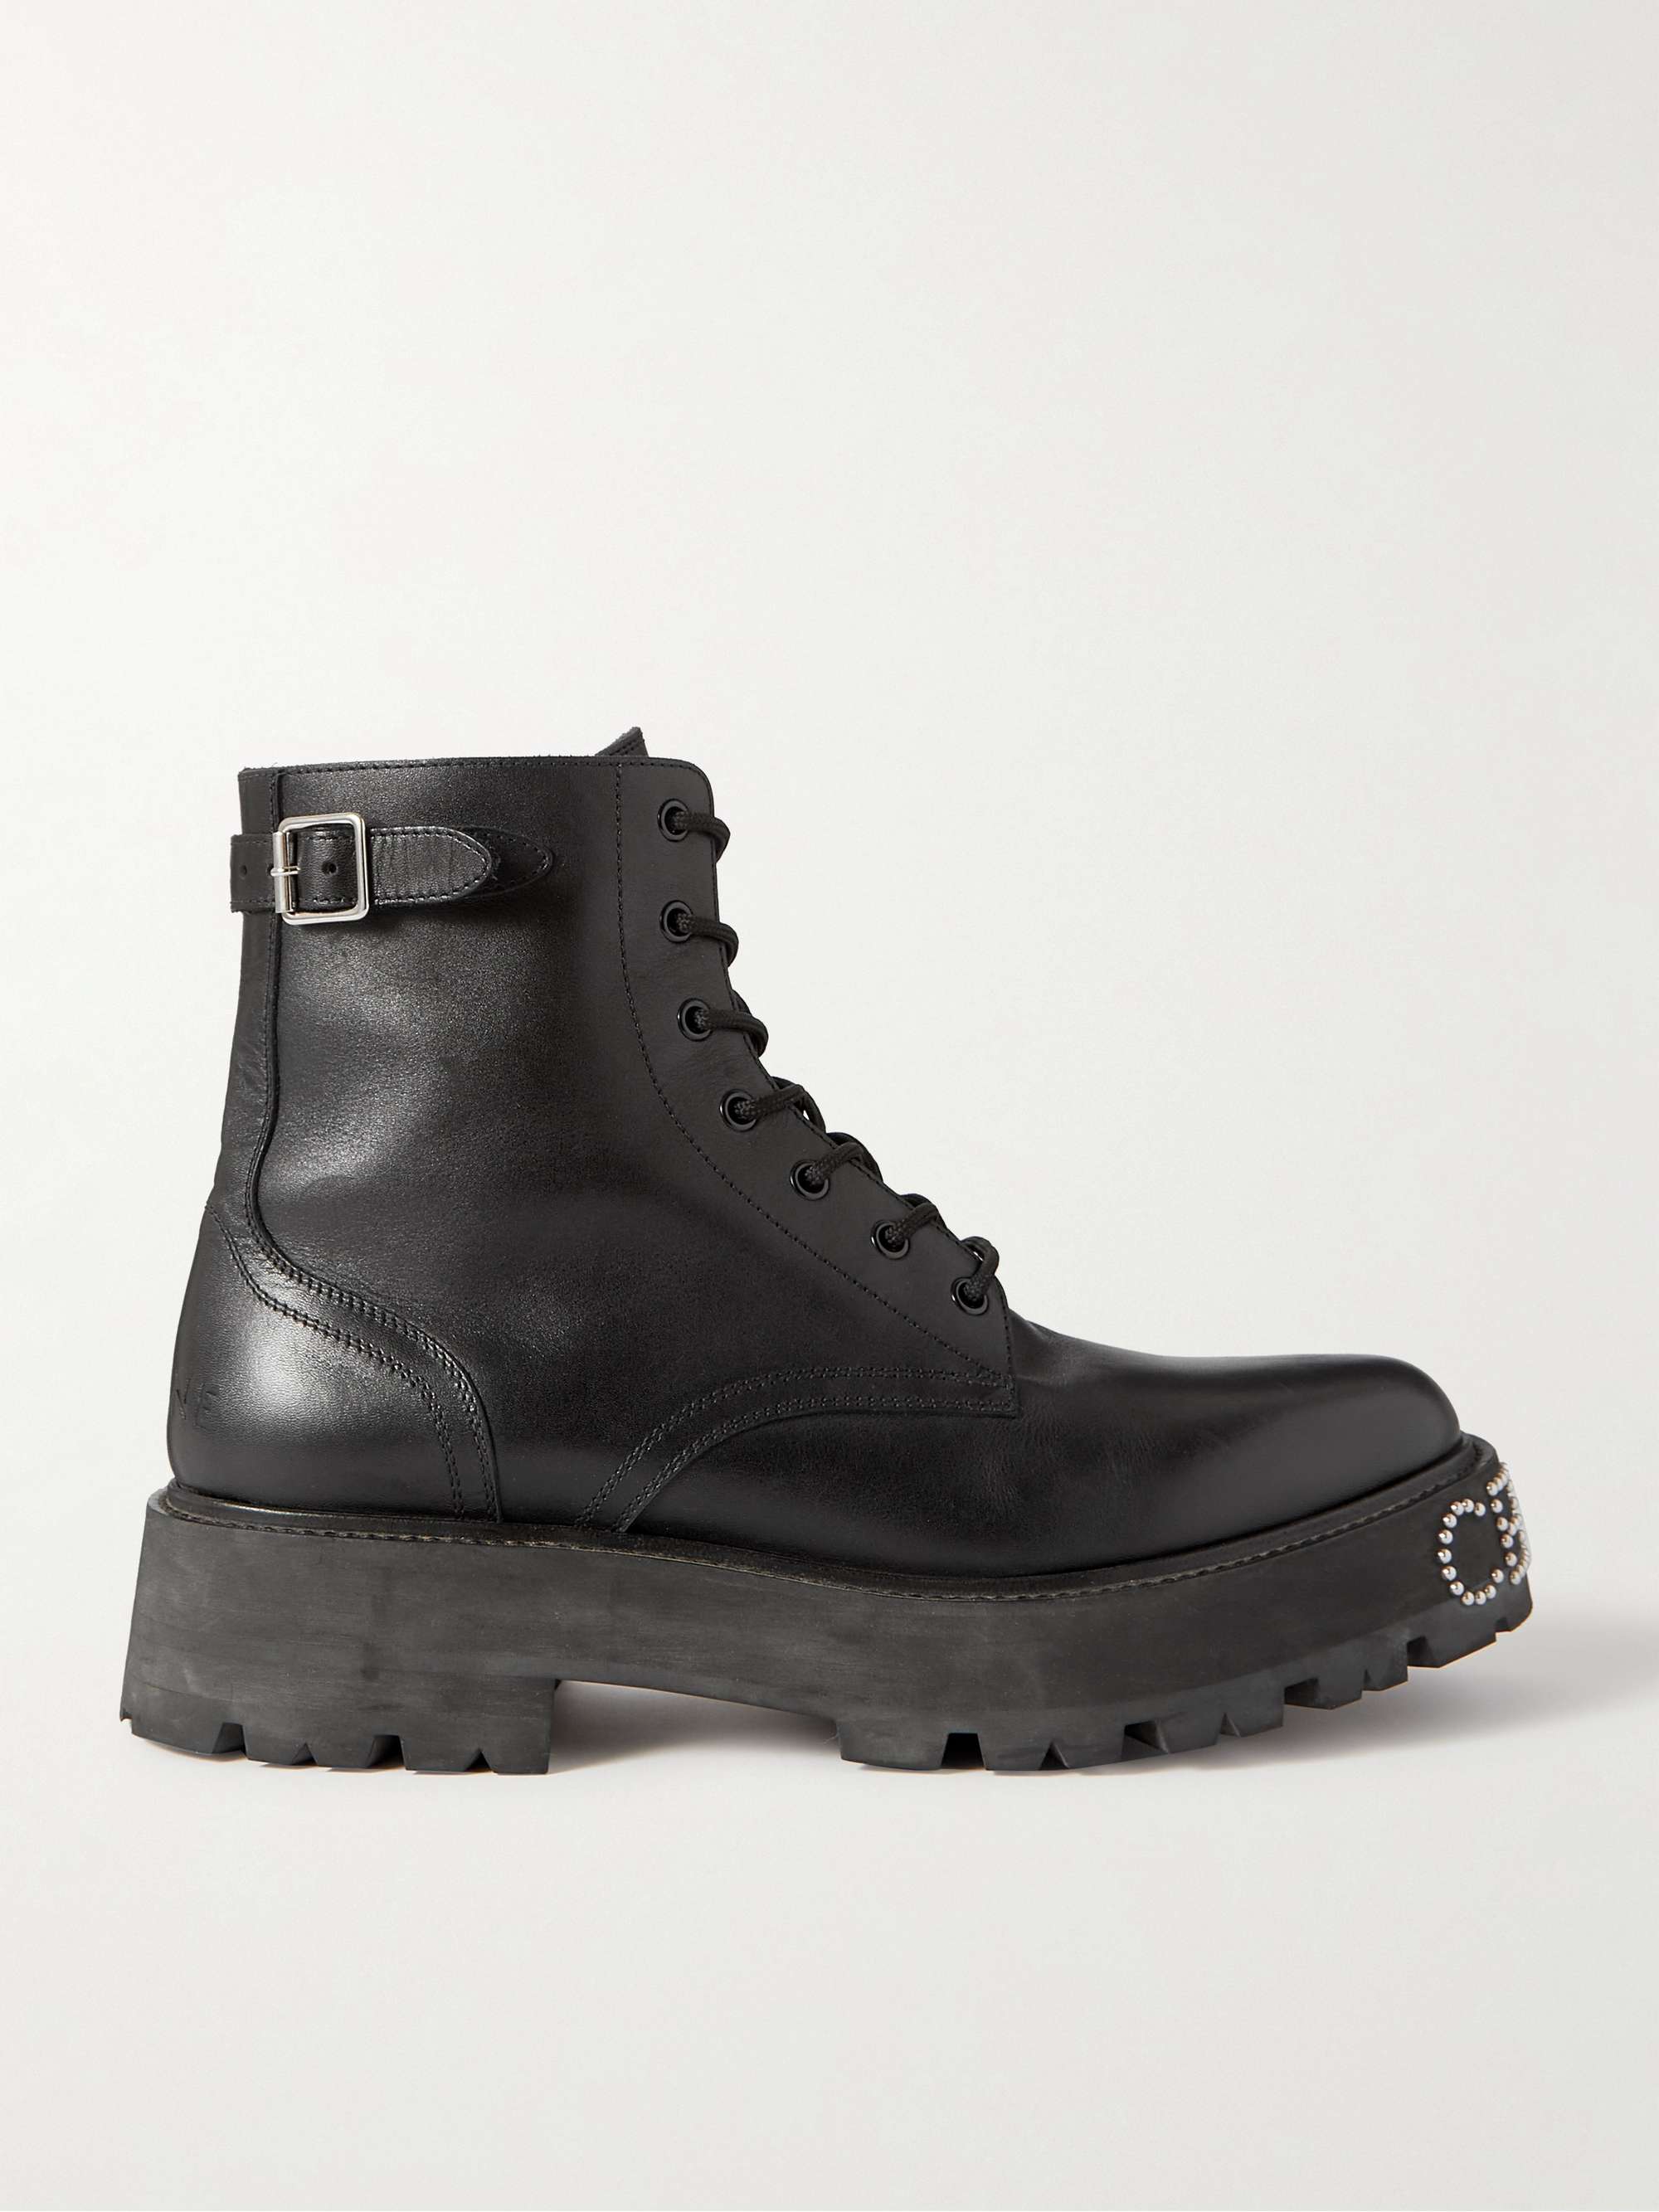 CELINE HOMME Ranger Studded Leather Boots for Men | MR PORTER